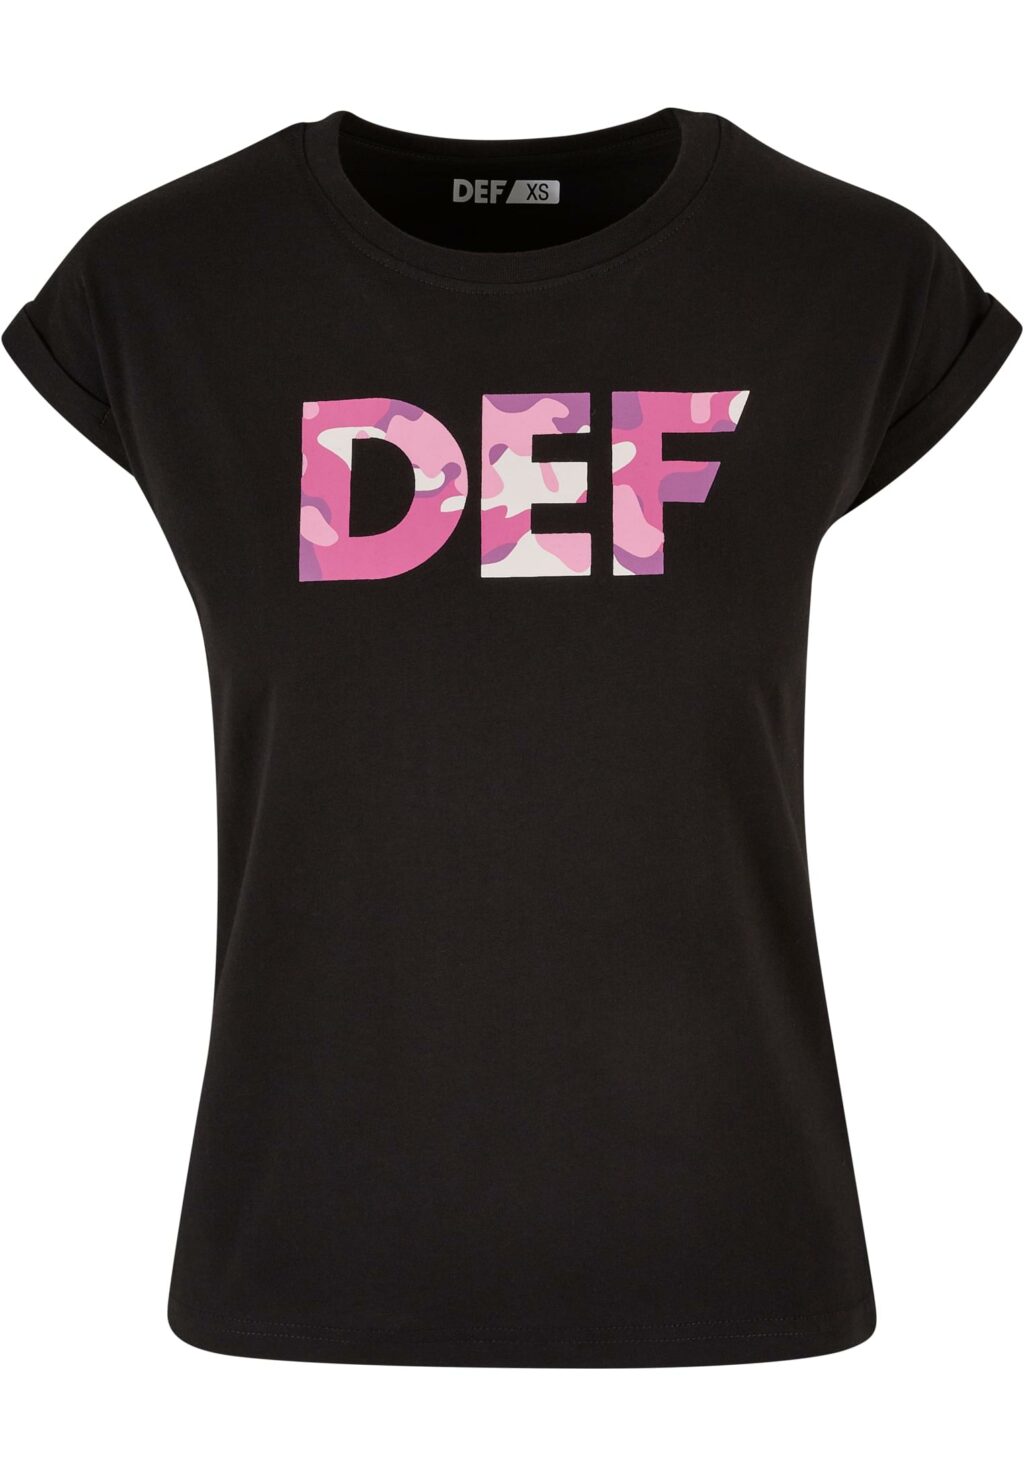 DEF Signed T-Shirt blk/pink DFTS107